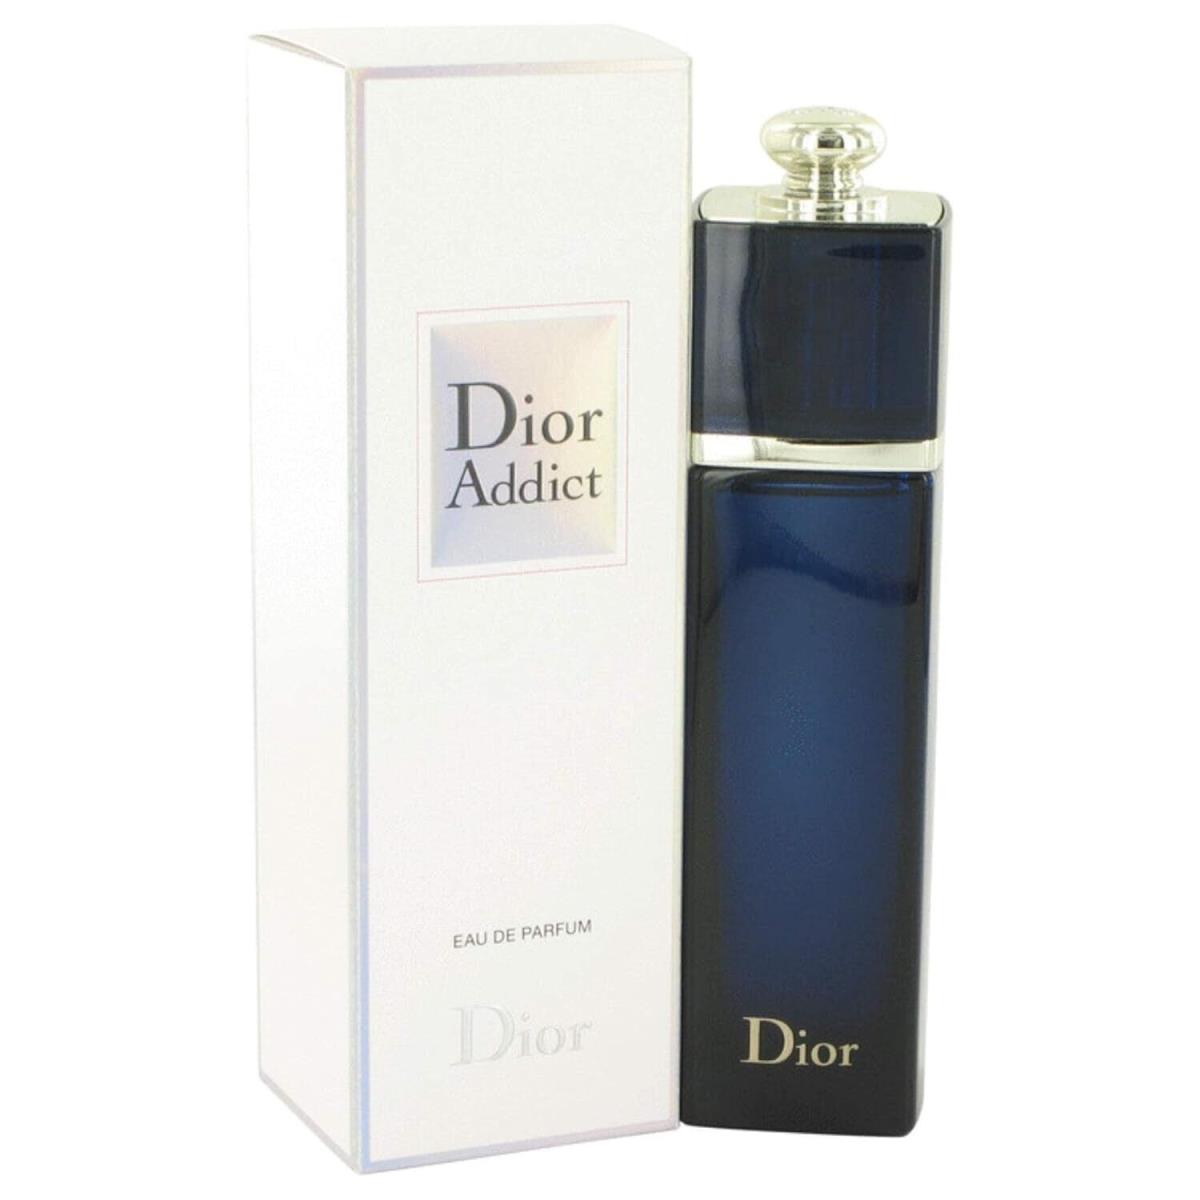 Dior Addict by Christian Dior Edp For Women 3.4 oz / 100 ml